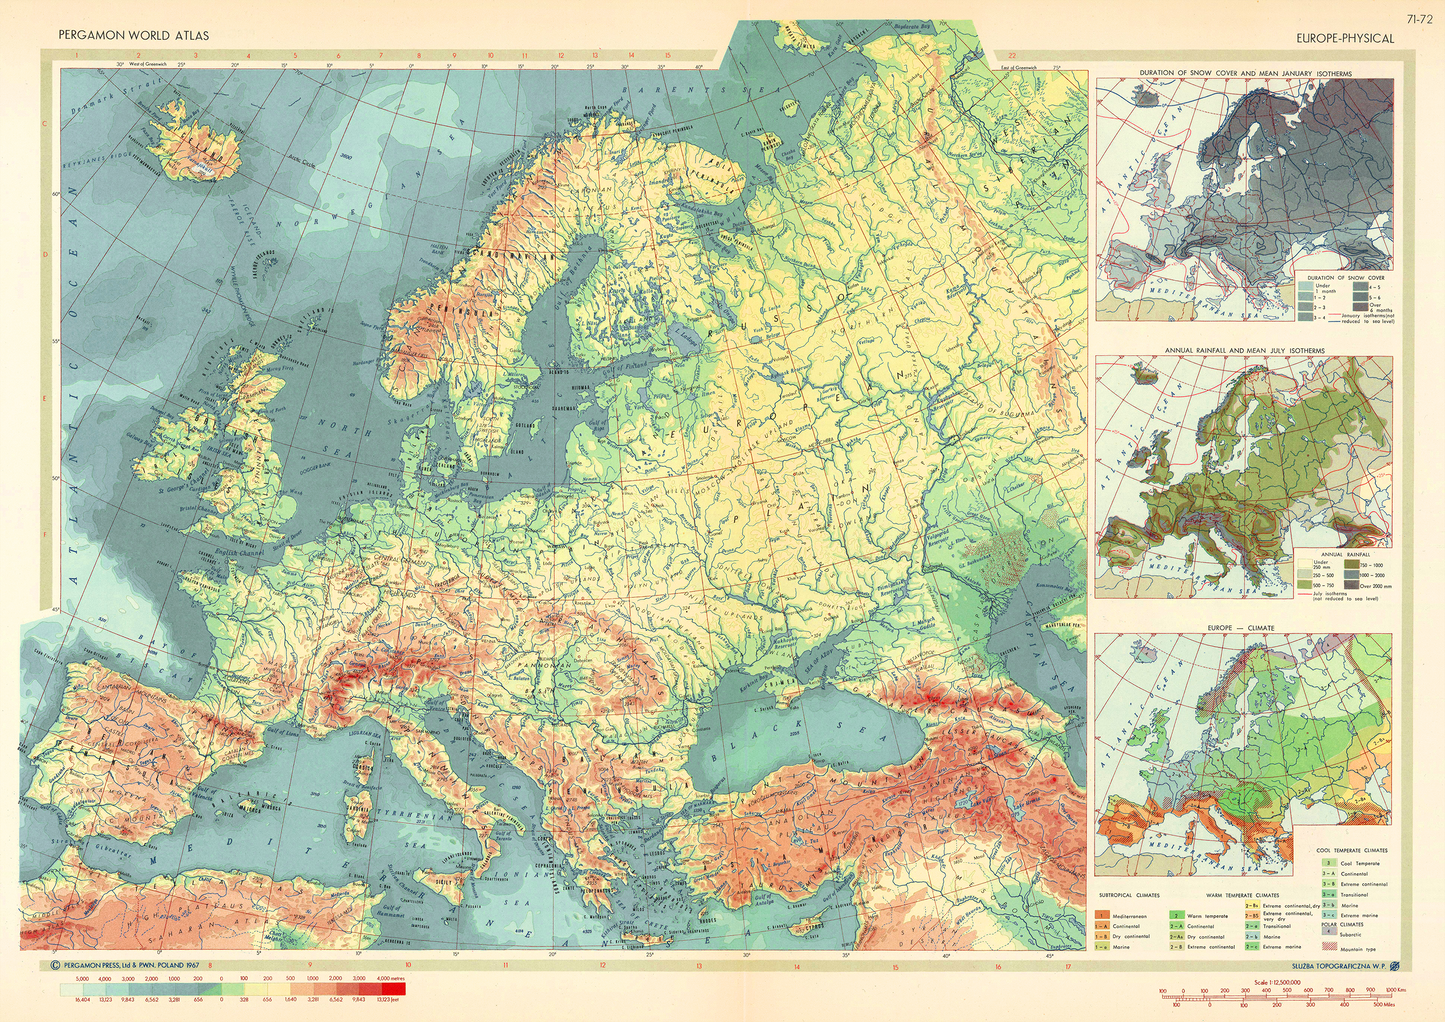 Pergamon Map of Europe in 1967